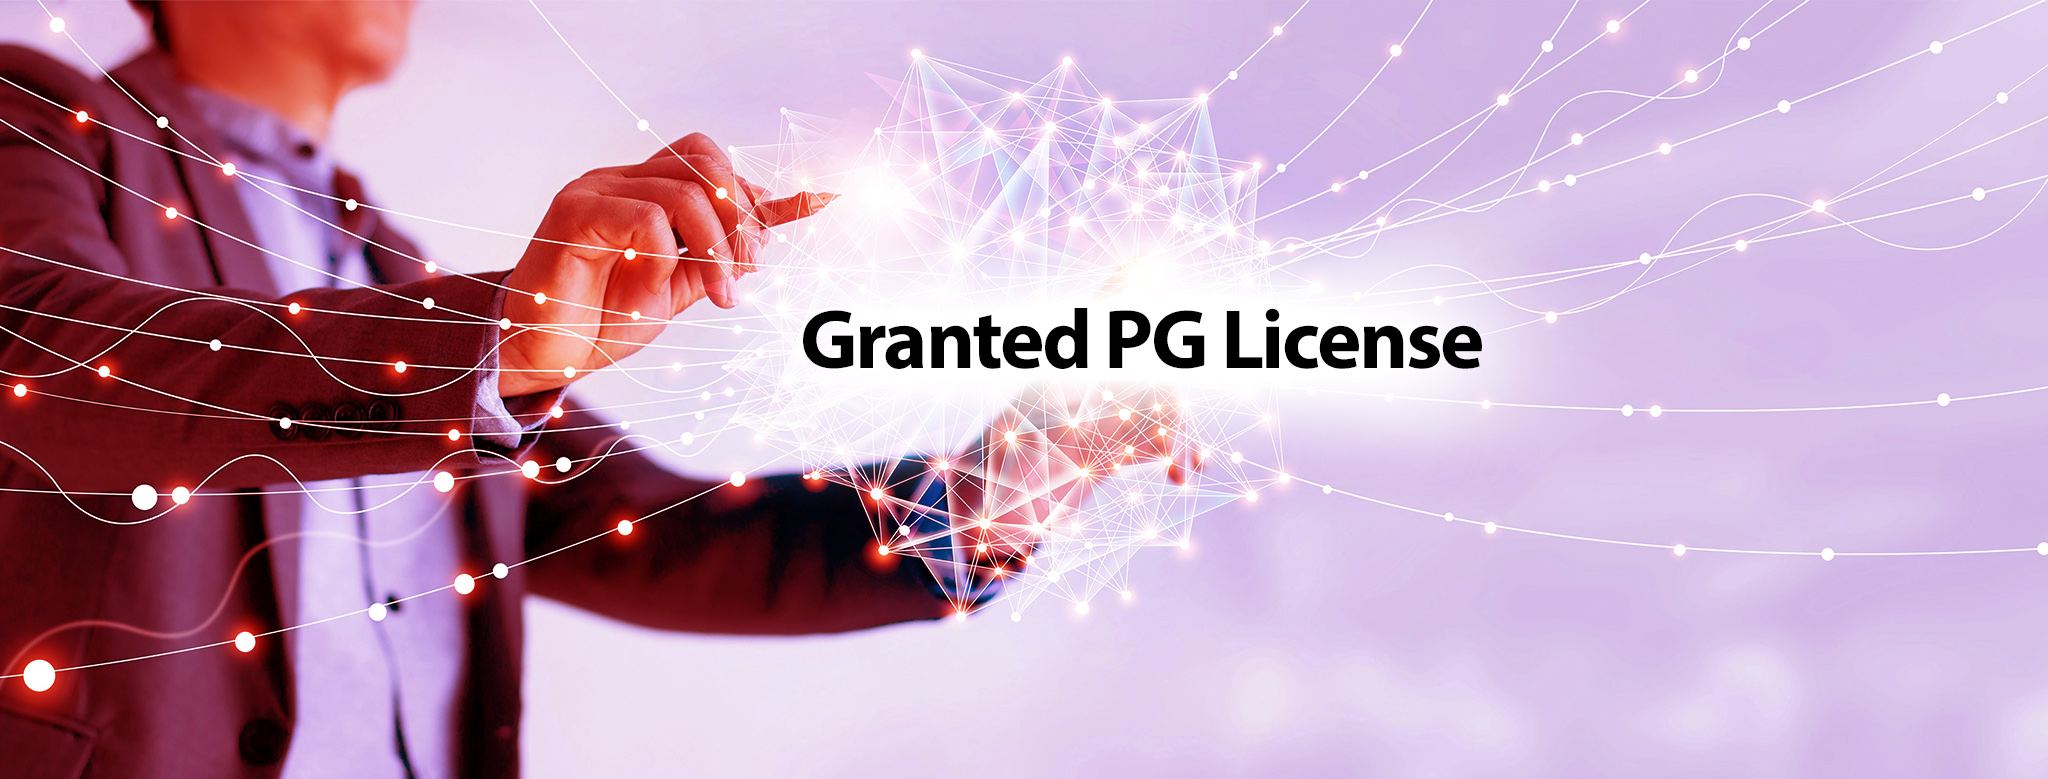 Granted PG License